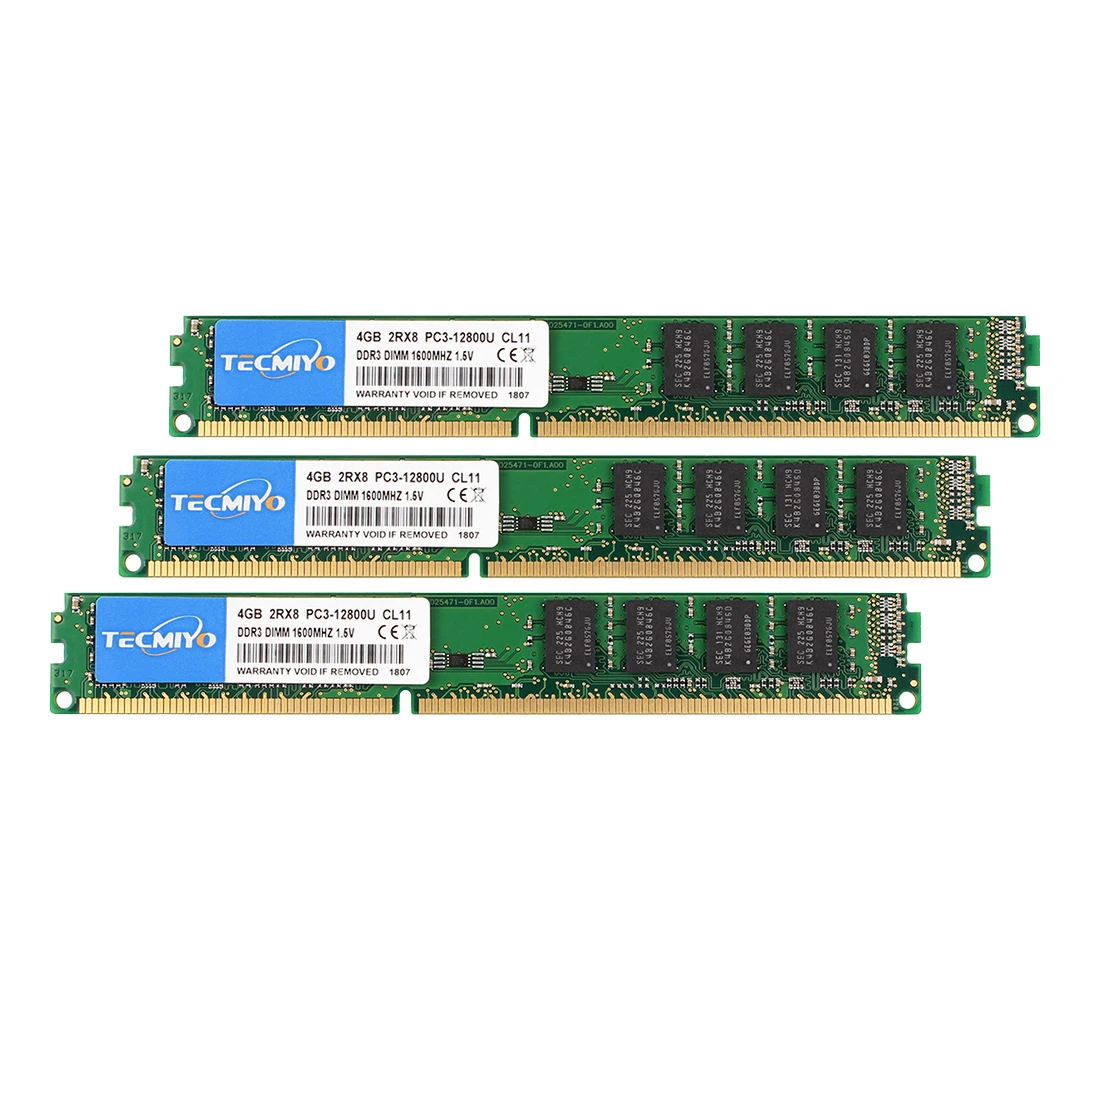 Дешевая память купить. Ram tecmiyo ddr3 4gb 1600 MHZ. Оперативная память DDR 3 - 1600 мегагерц 4 ГБ. Оперативная память 4 ГБ ddr3 1600 МГЦ для ПК. Оперативная память Patriot 4gb ddr2 UDIMM 800 MHZ.